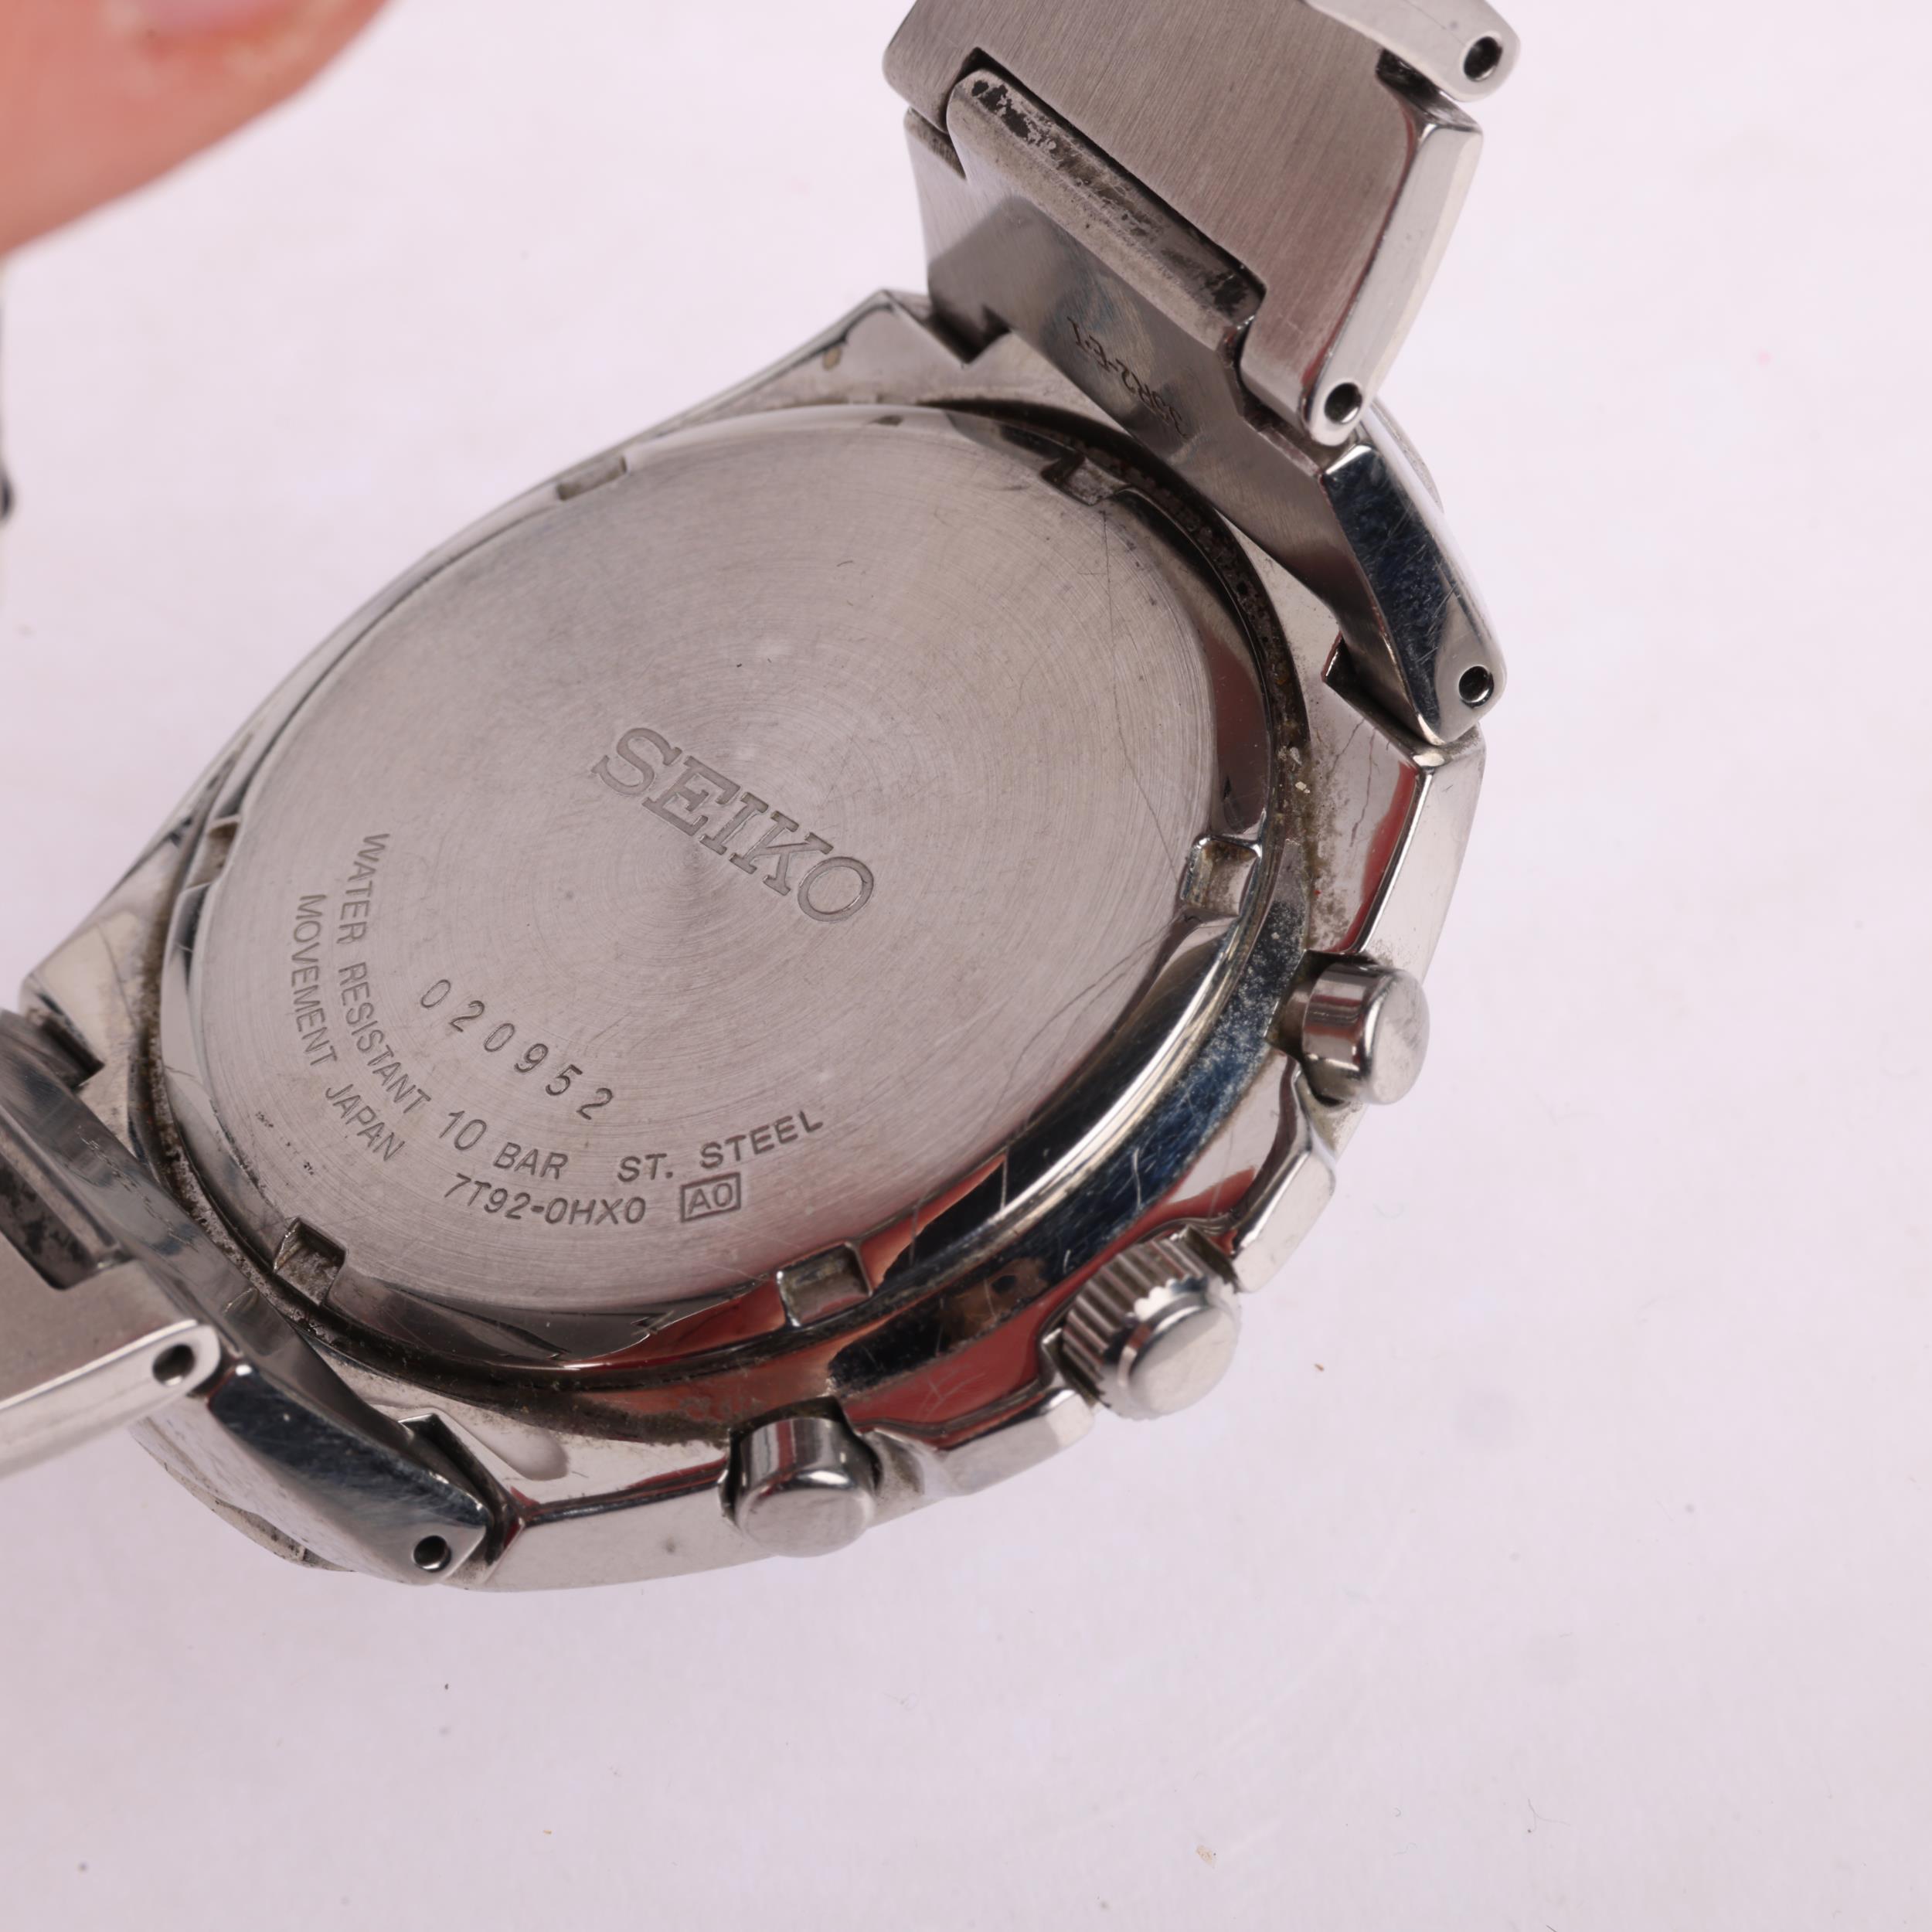 SEIKO - a stainless steel quartz chronograph calendar bracelet watch, ref. 7T92-0HX0, circa 2010, - Image 4 of 5